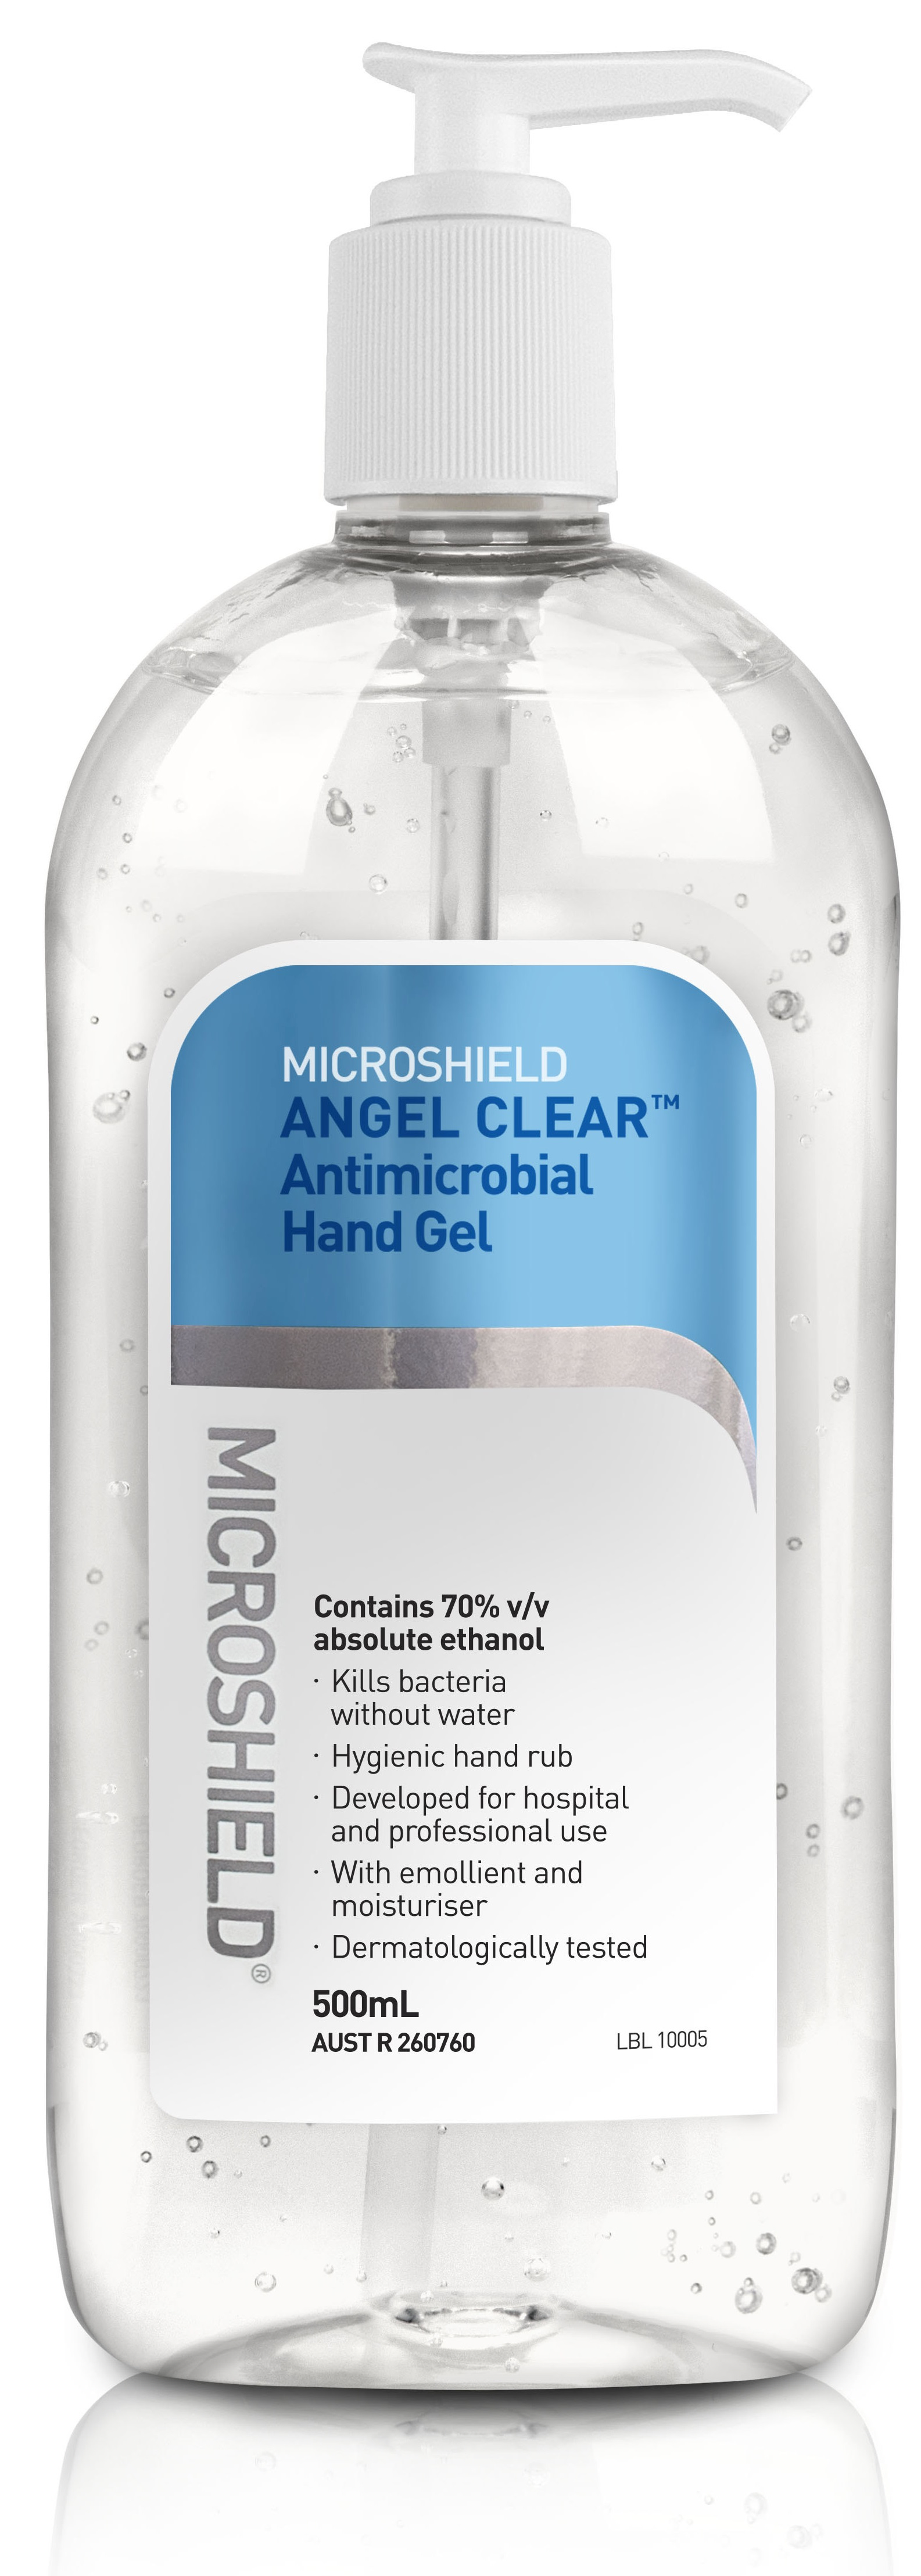 Microshield Angel Clear Antimicrobial Hand Gel 500ml